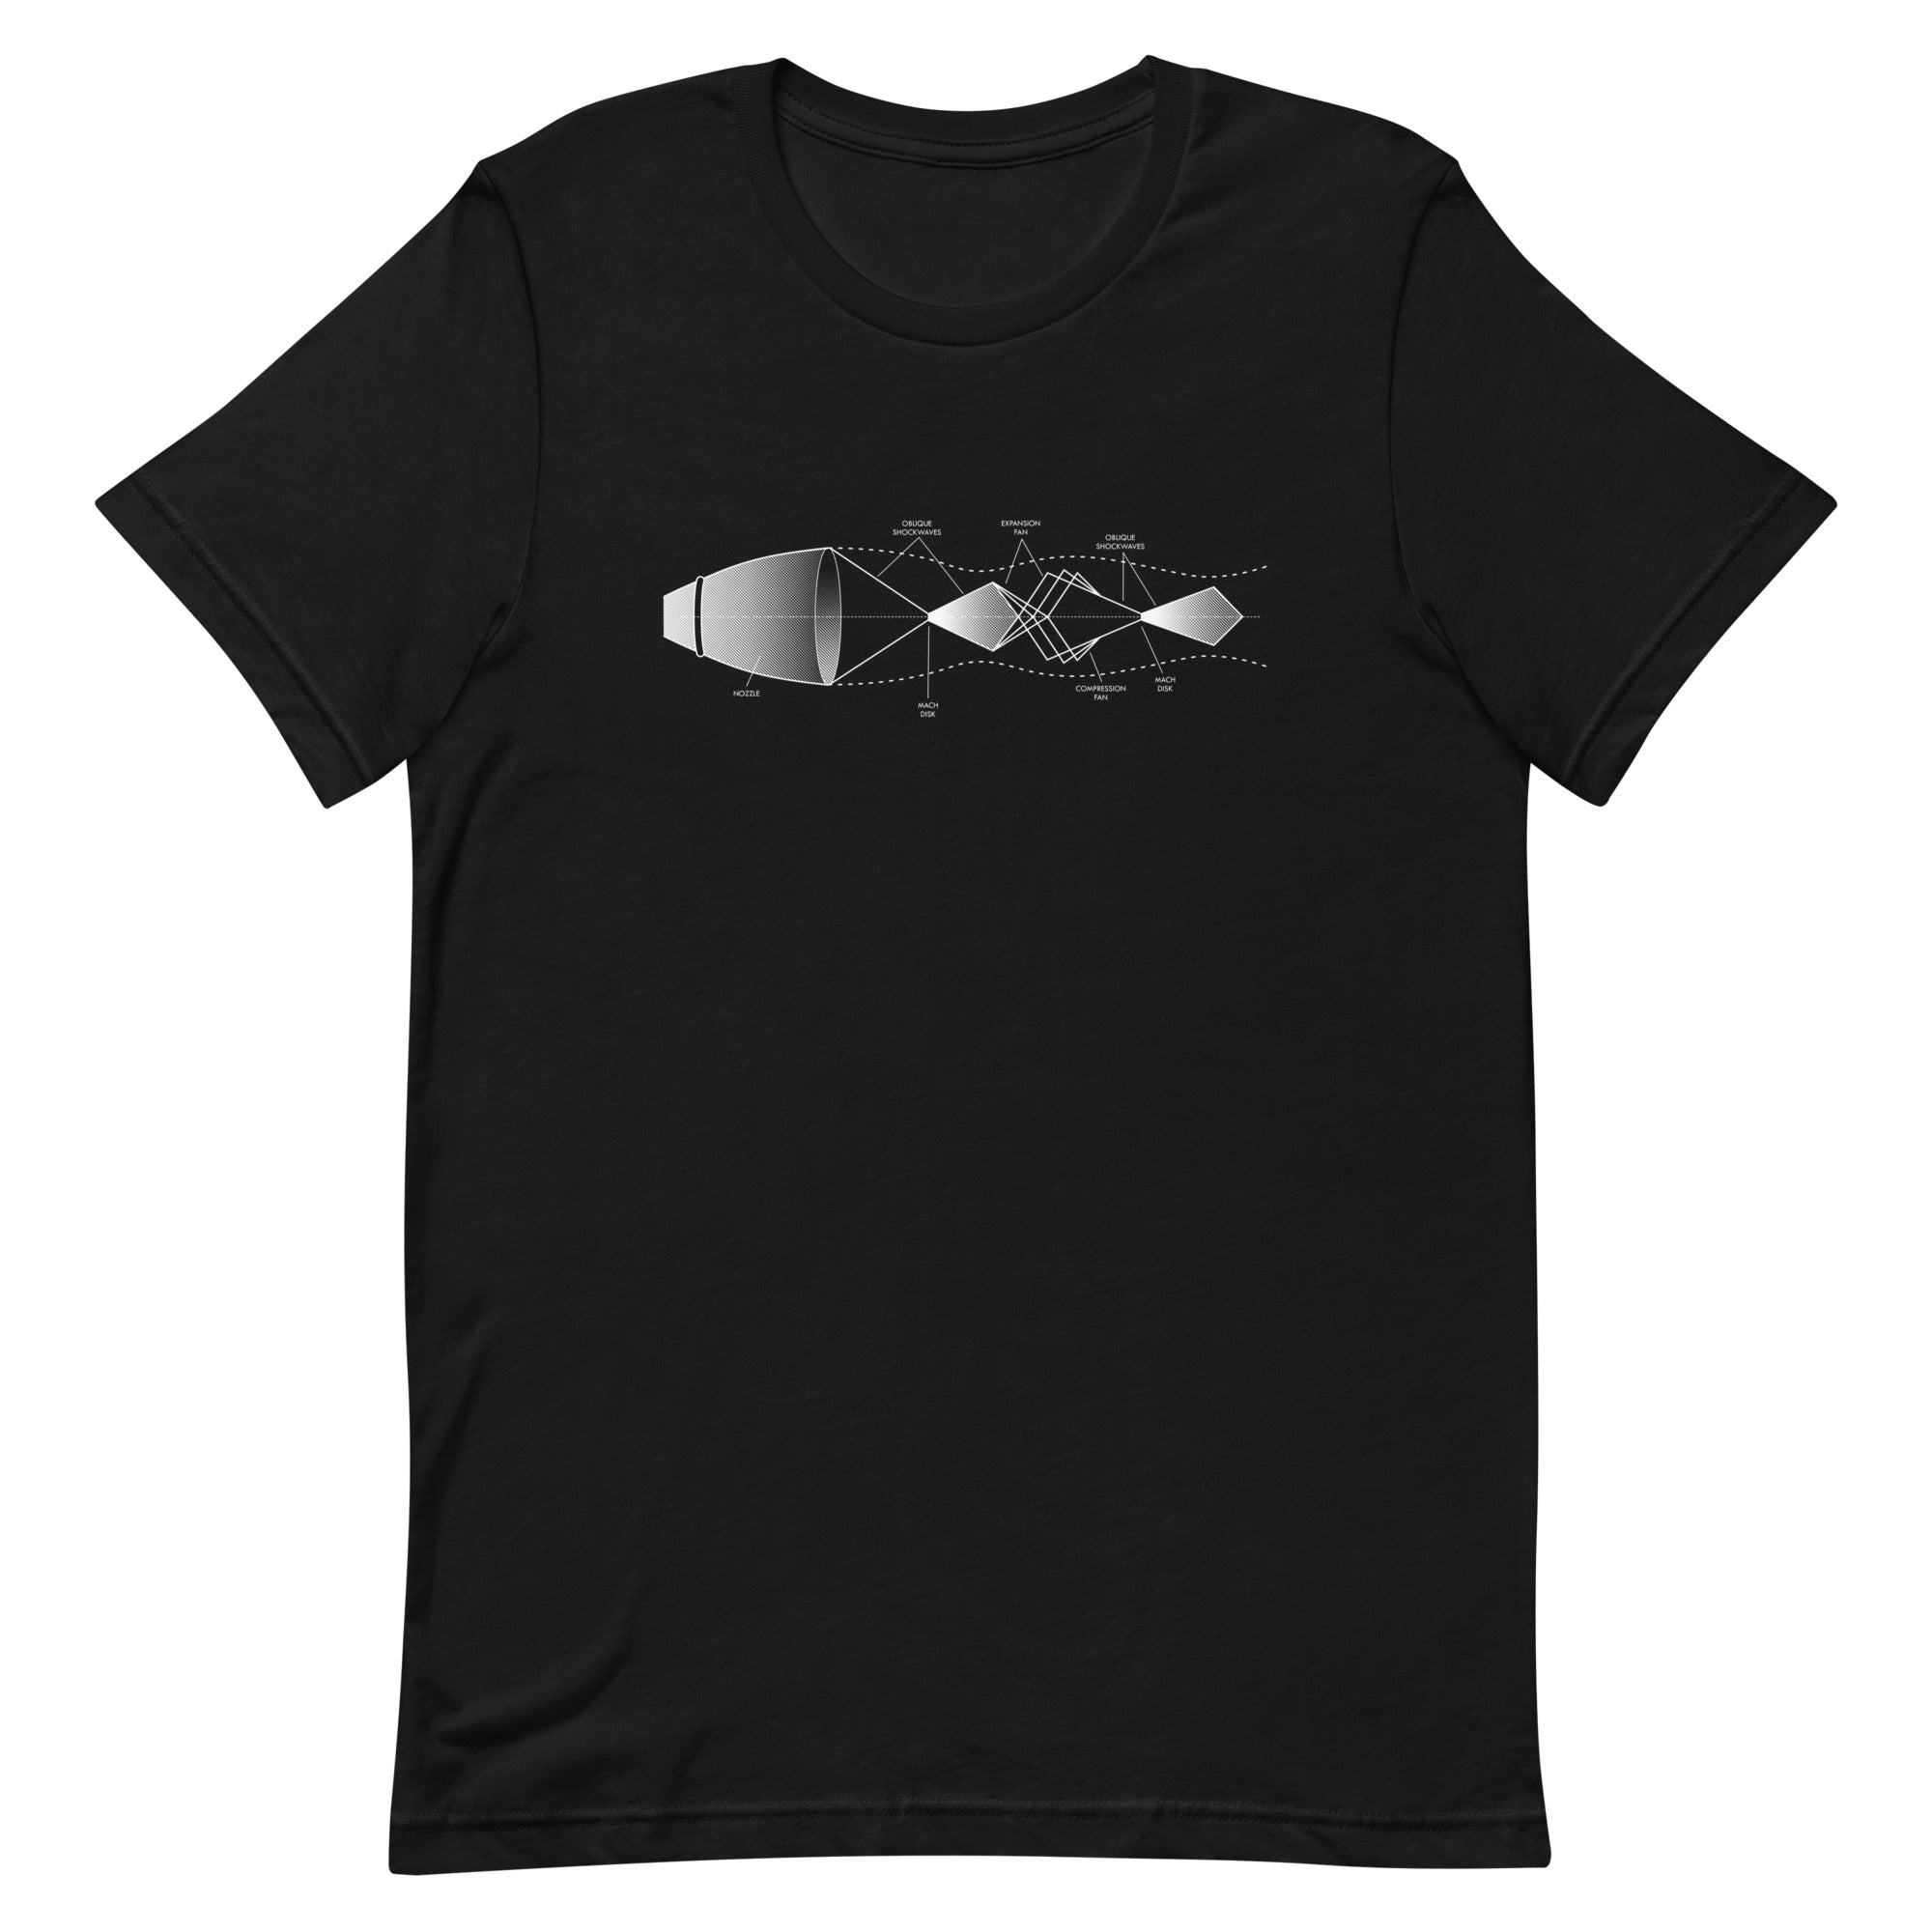 Mach Diamonds - Unisex t-shirt